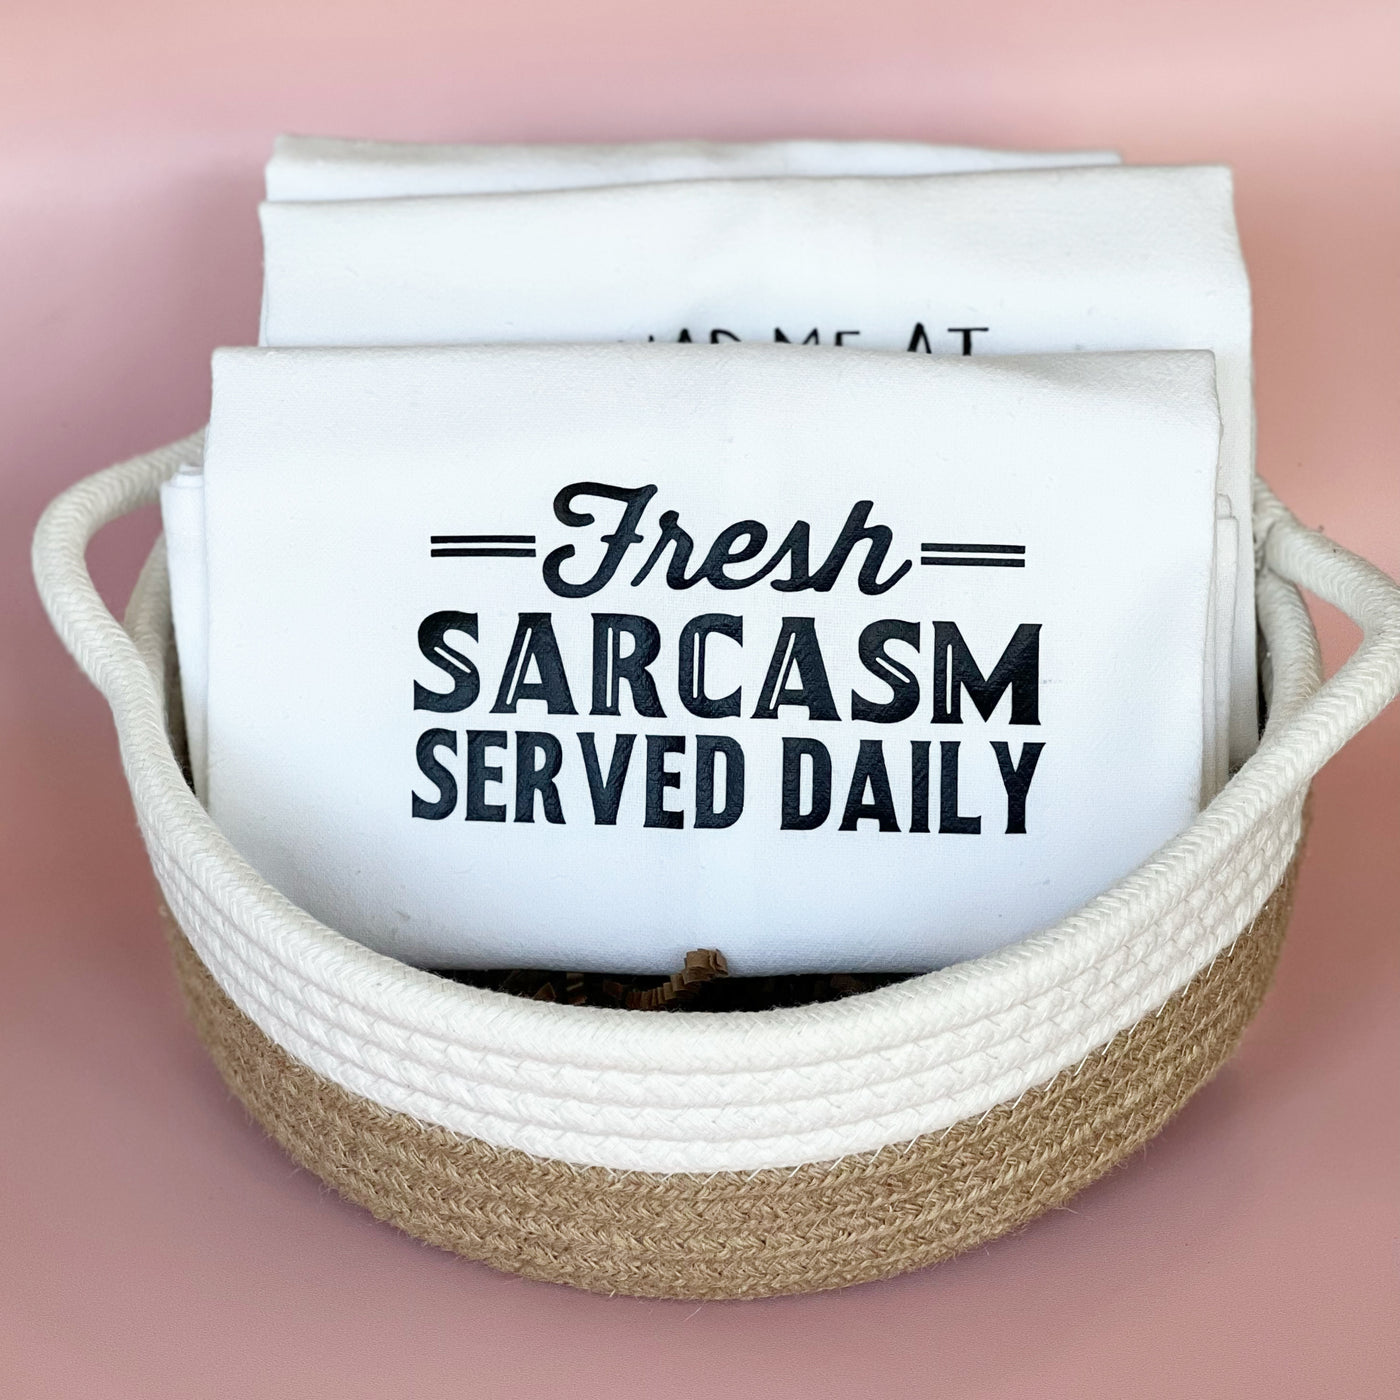 fresh sarcasm served daily - humorous bar kitchen towel